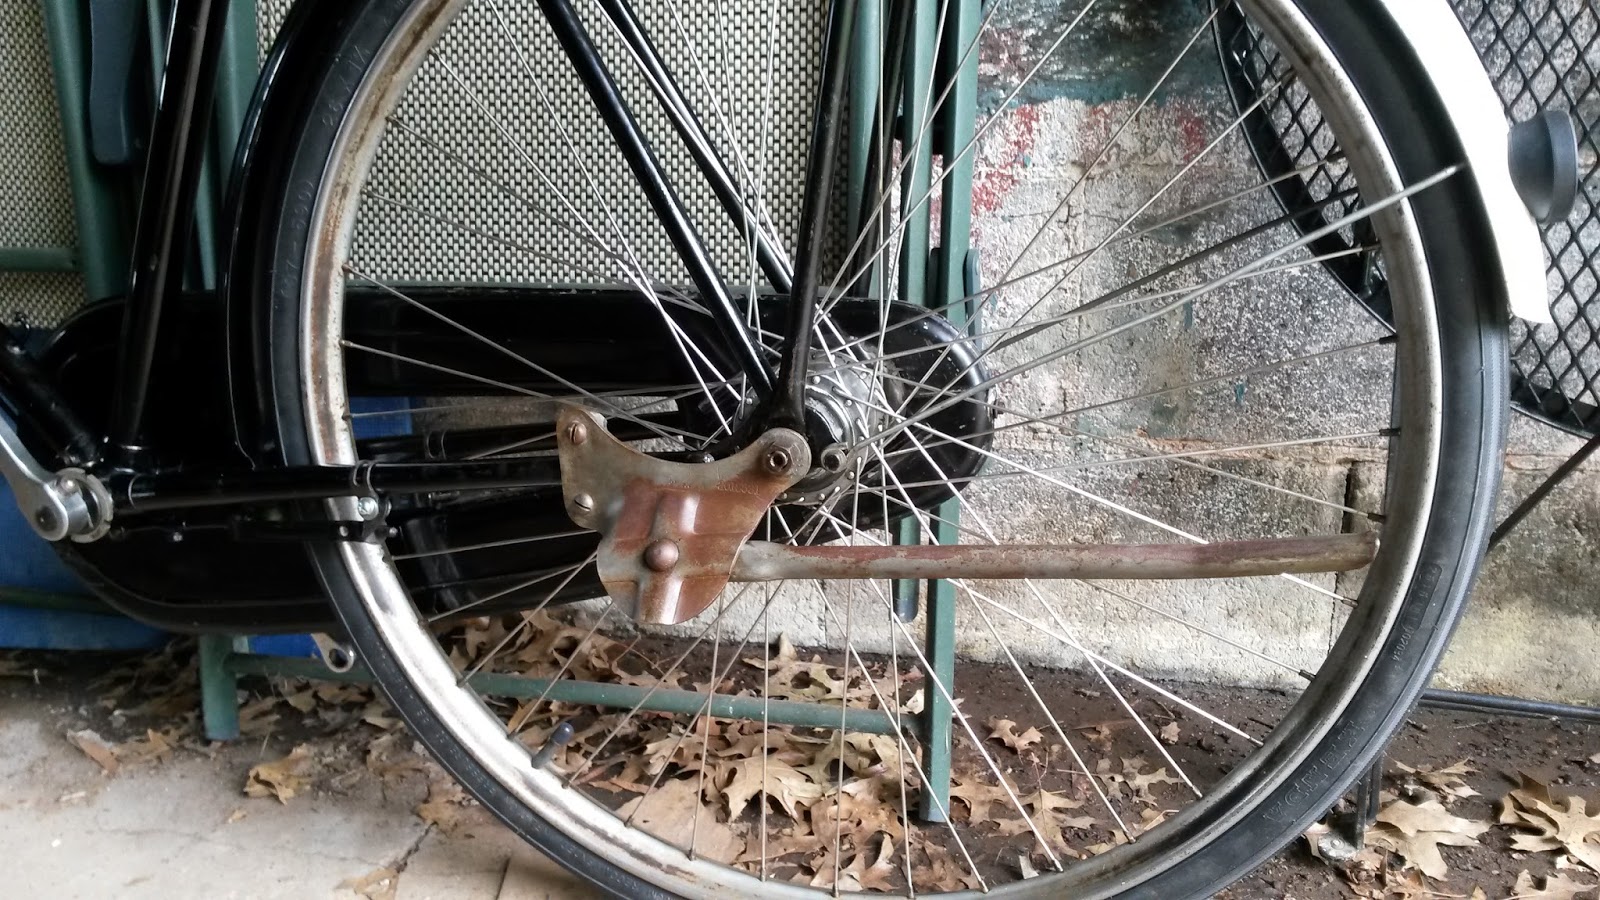 raleigh bike kickstand